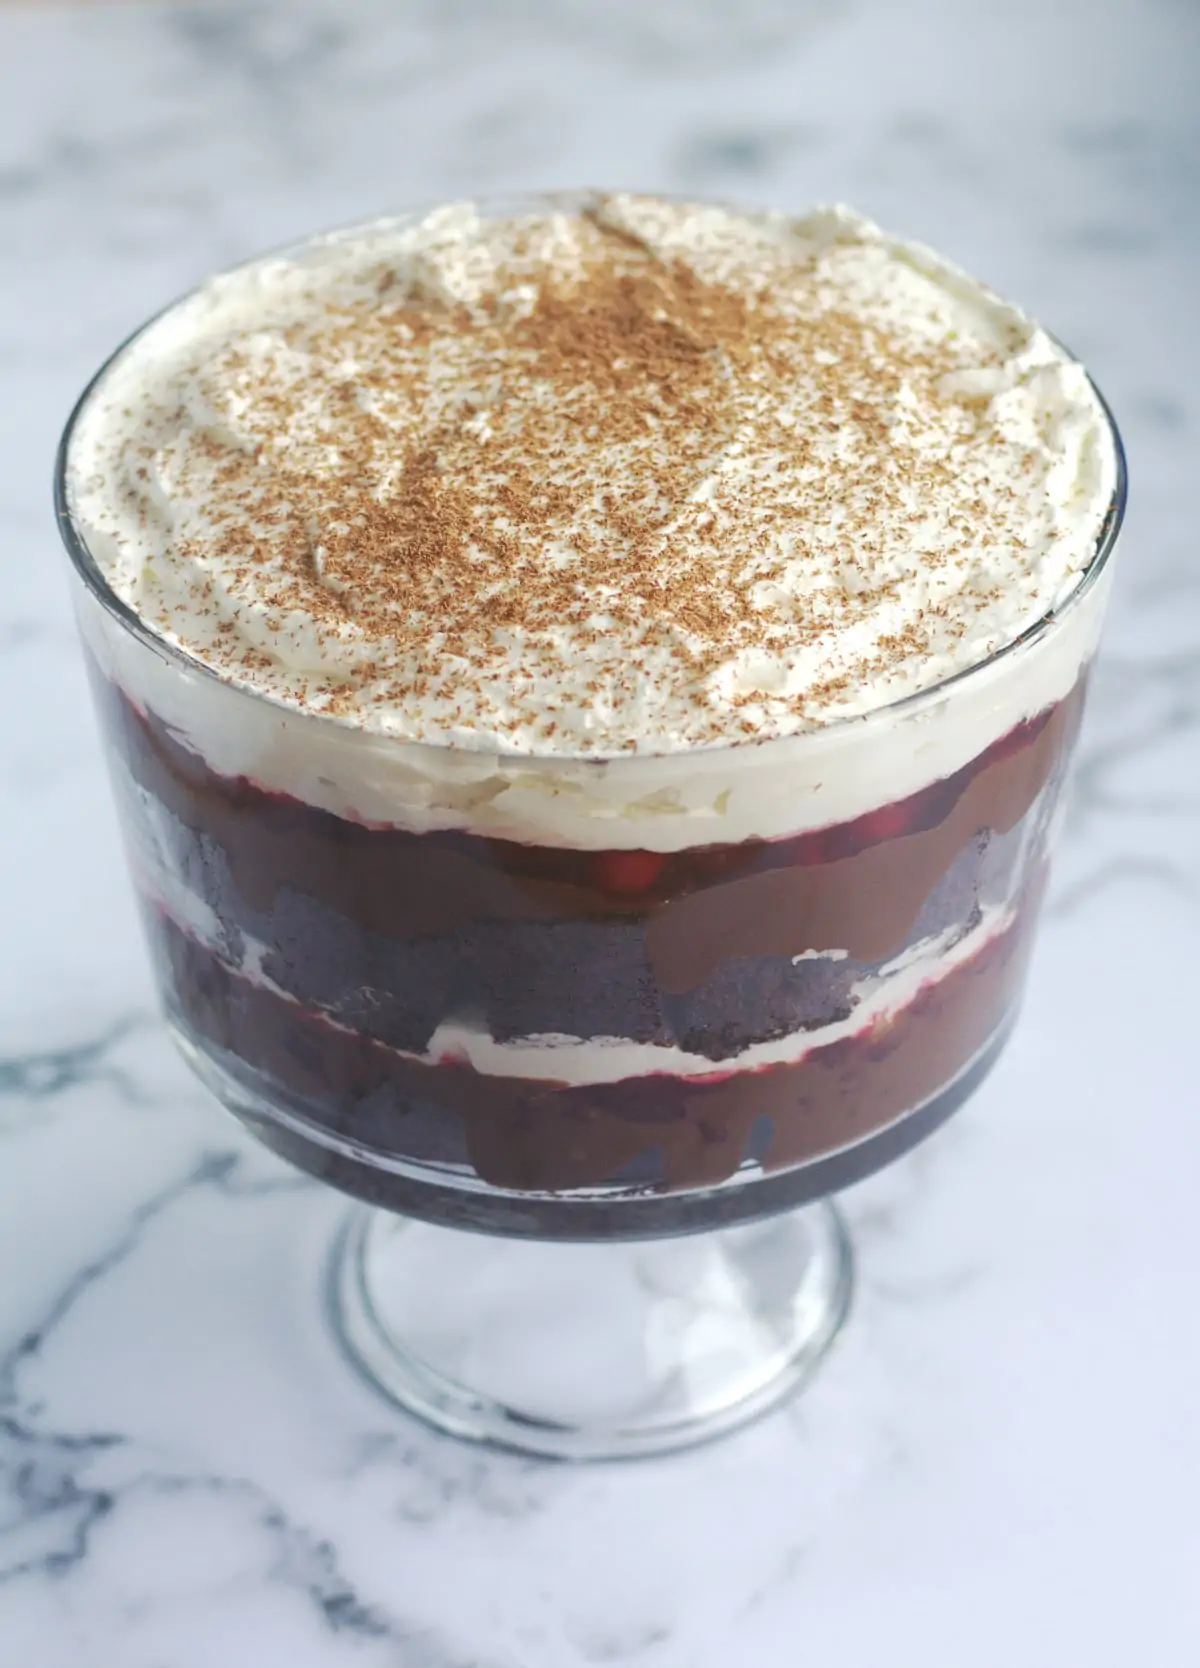 A trifle in a trifle dish.